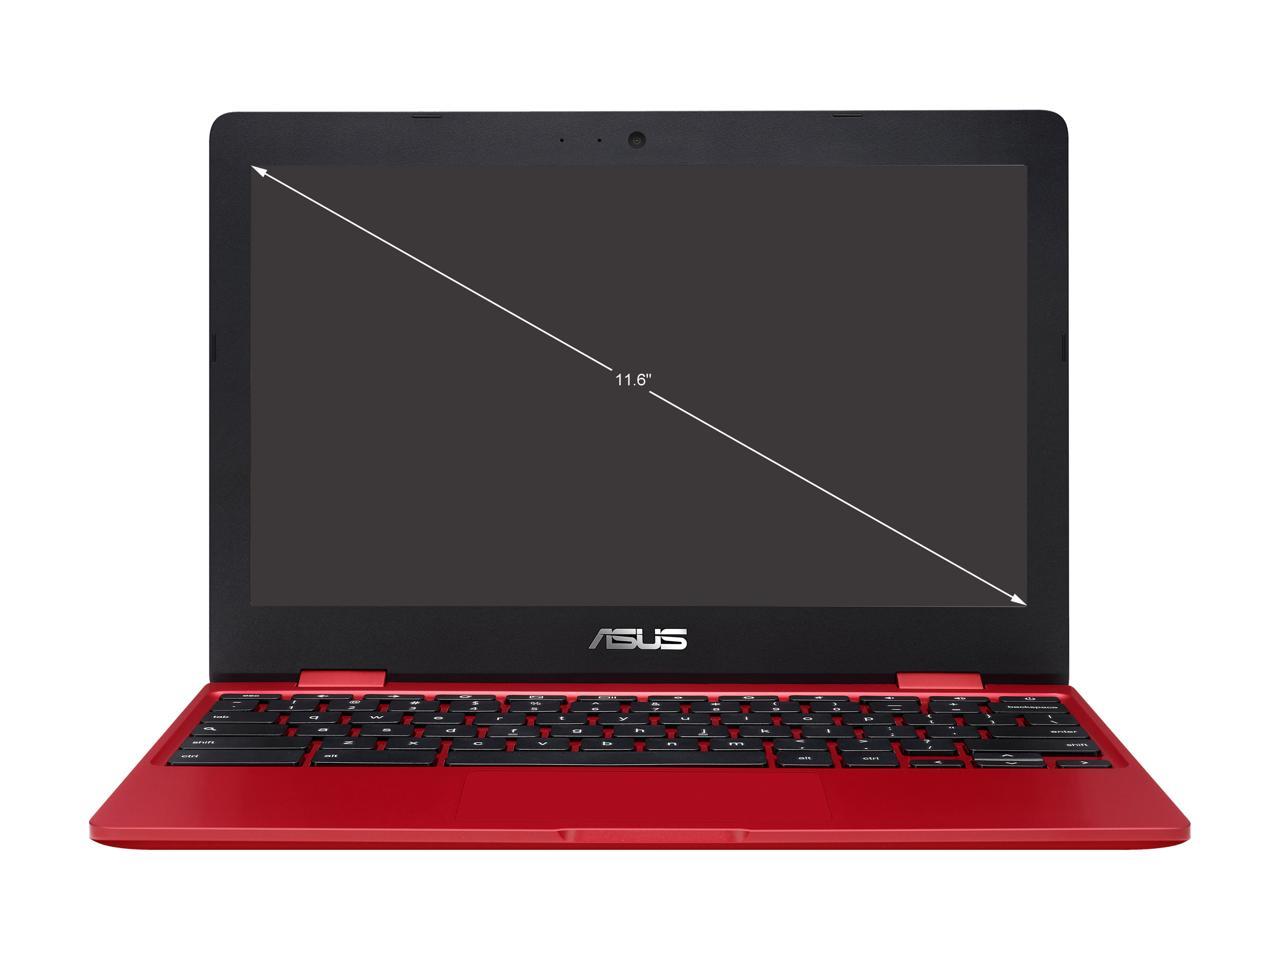 ASUS Chromebook Laptop in Red, 12, Intel Celeron, 32GB Flash Storage, 4GB RAM, C223NA-DH02-RD - image 5 of 17